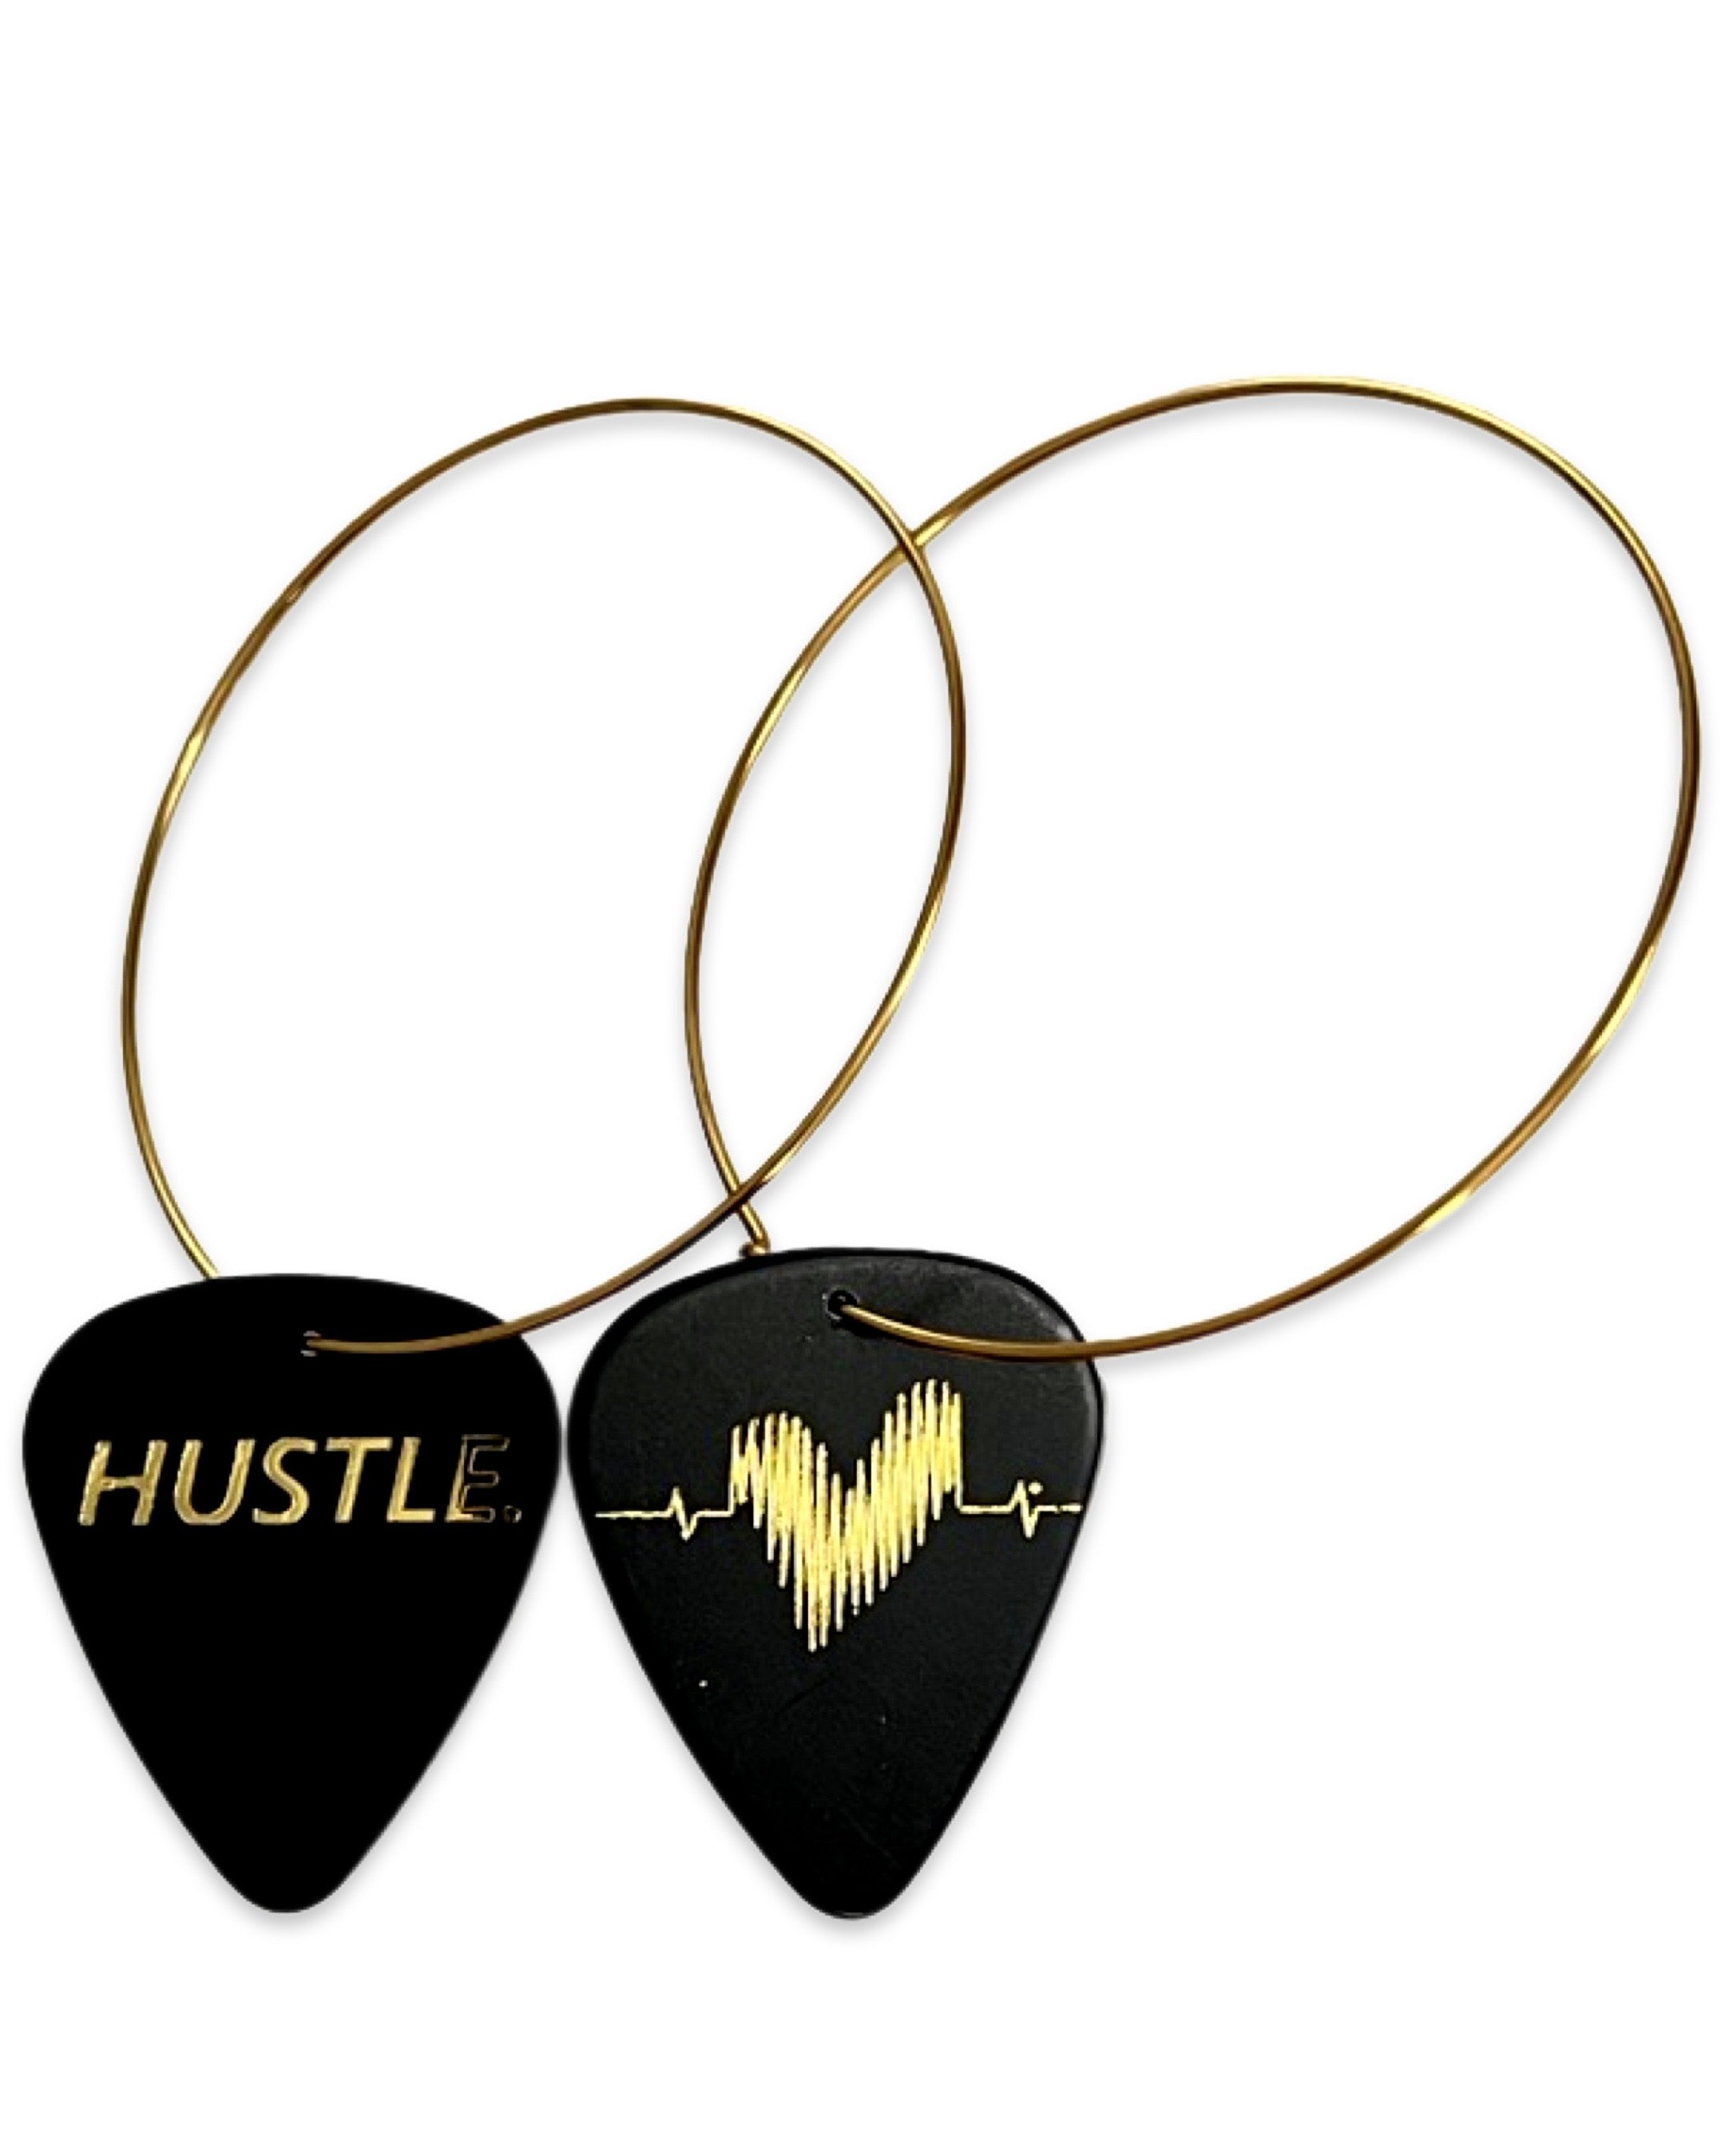 HUSTLE. Black Celluloid Reversible Single Guitar Pick Earrings